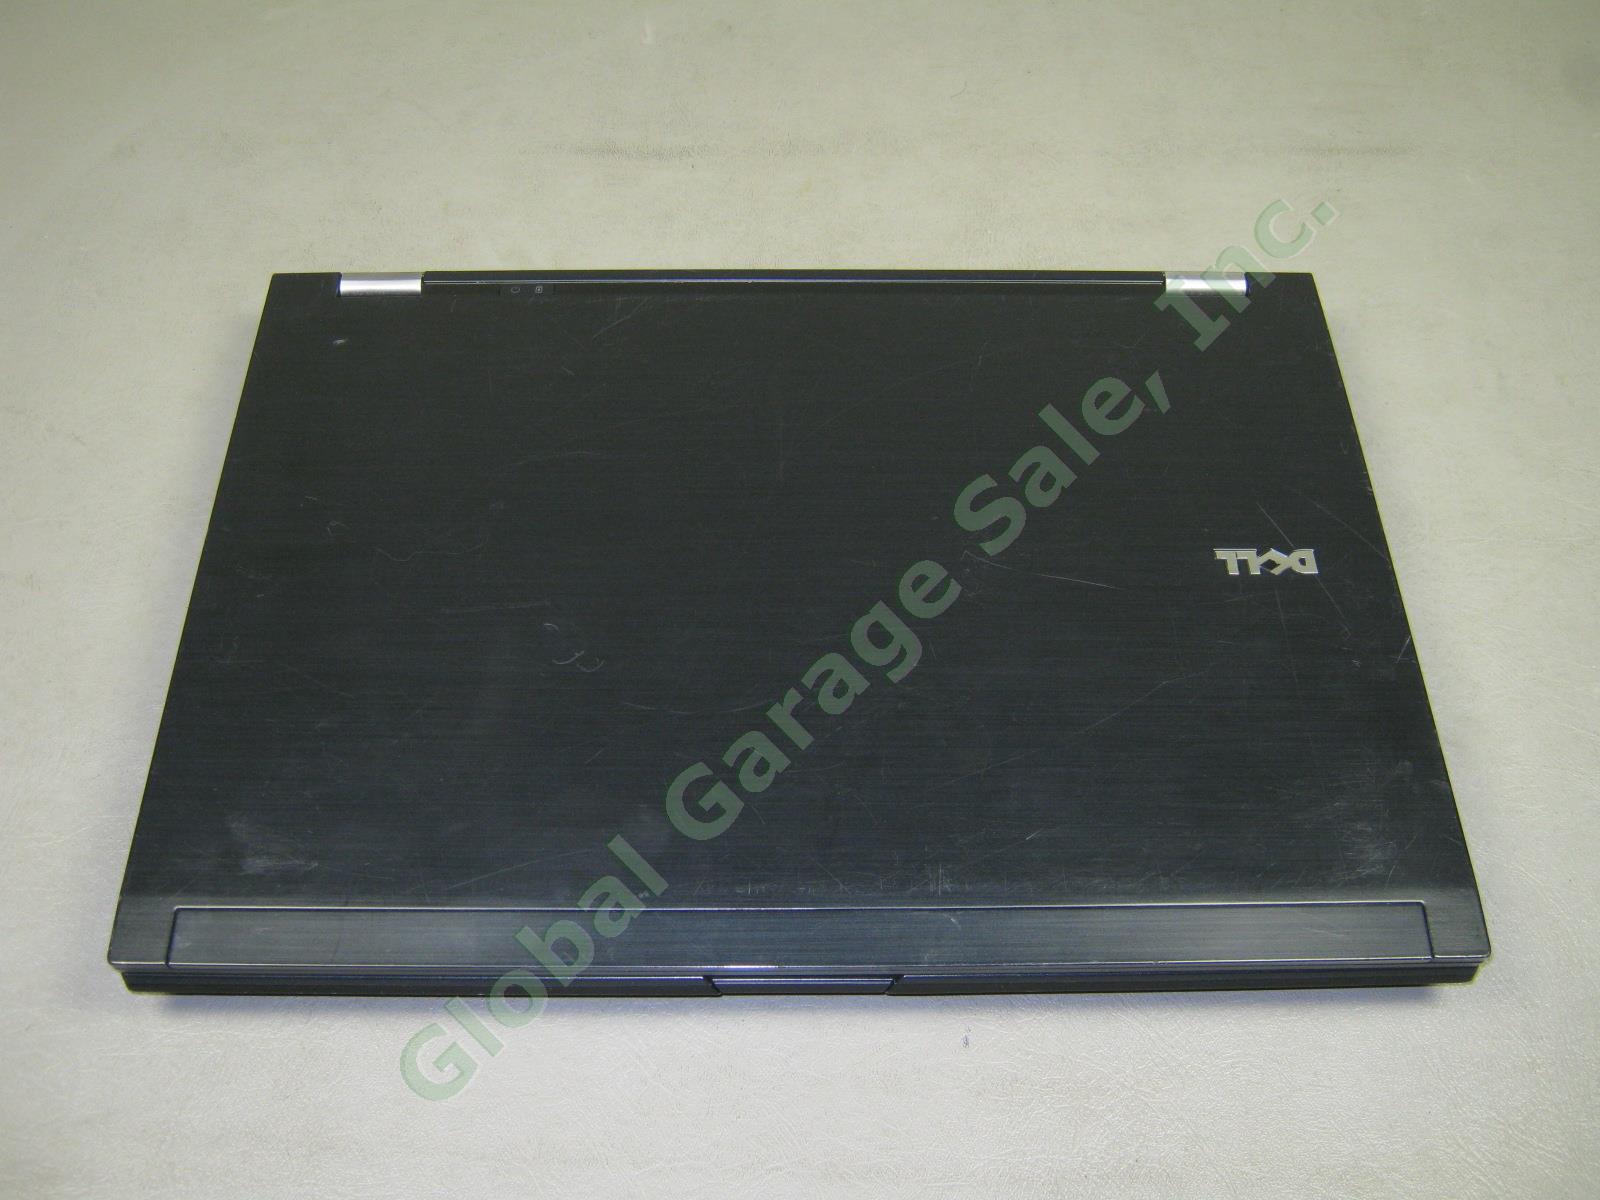 Dell Latitude E6500 Laptop 15.4" C2D 2.53GHz 2GB RAM 160GB HDD Window 7 Ultimate 1